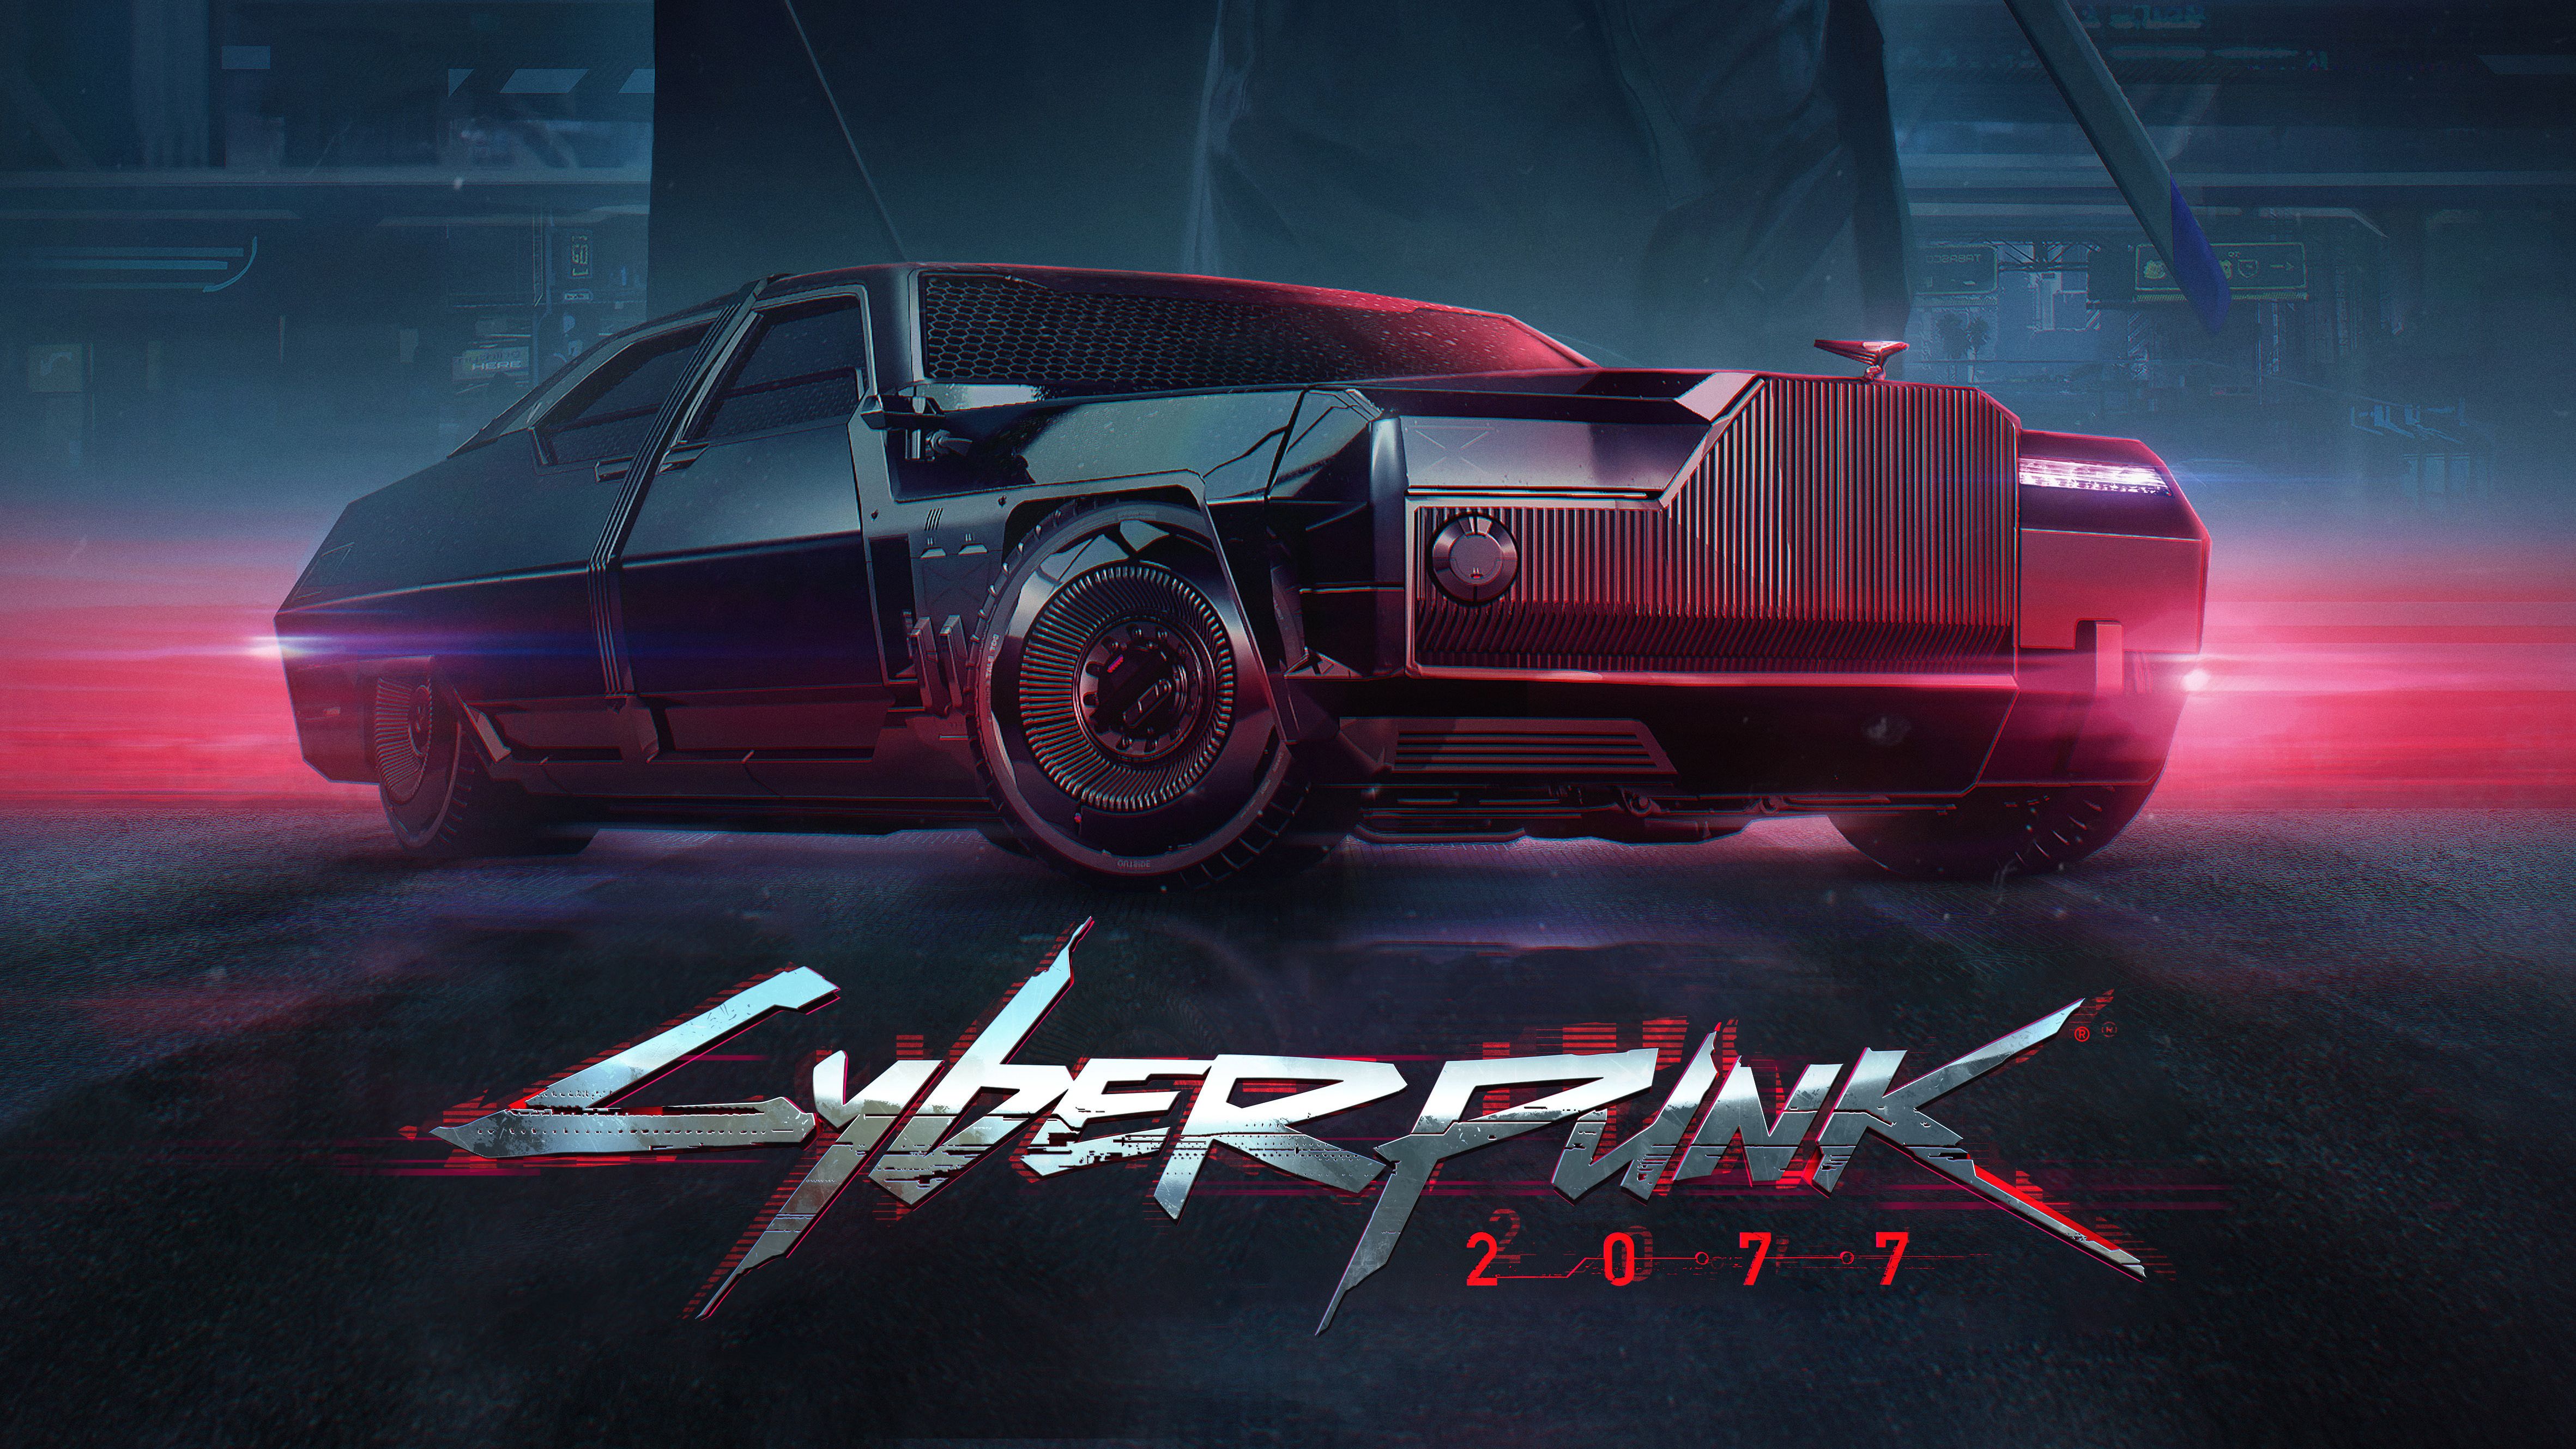 Cyberpunk 2077 Poster 4k, HD Games, 4k Wallpaper, Image